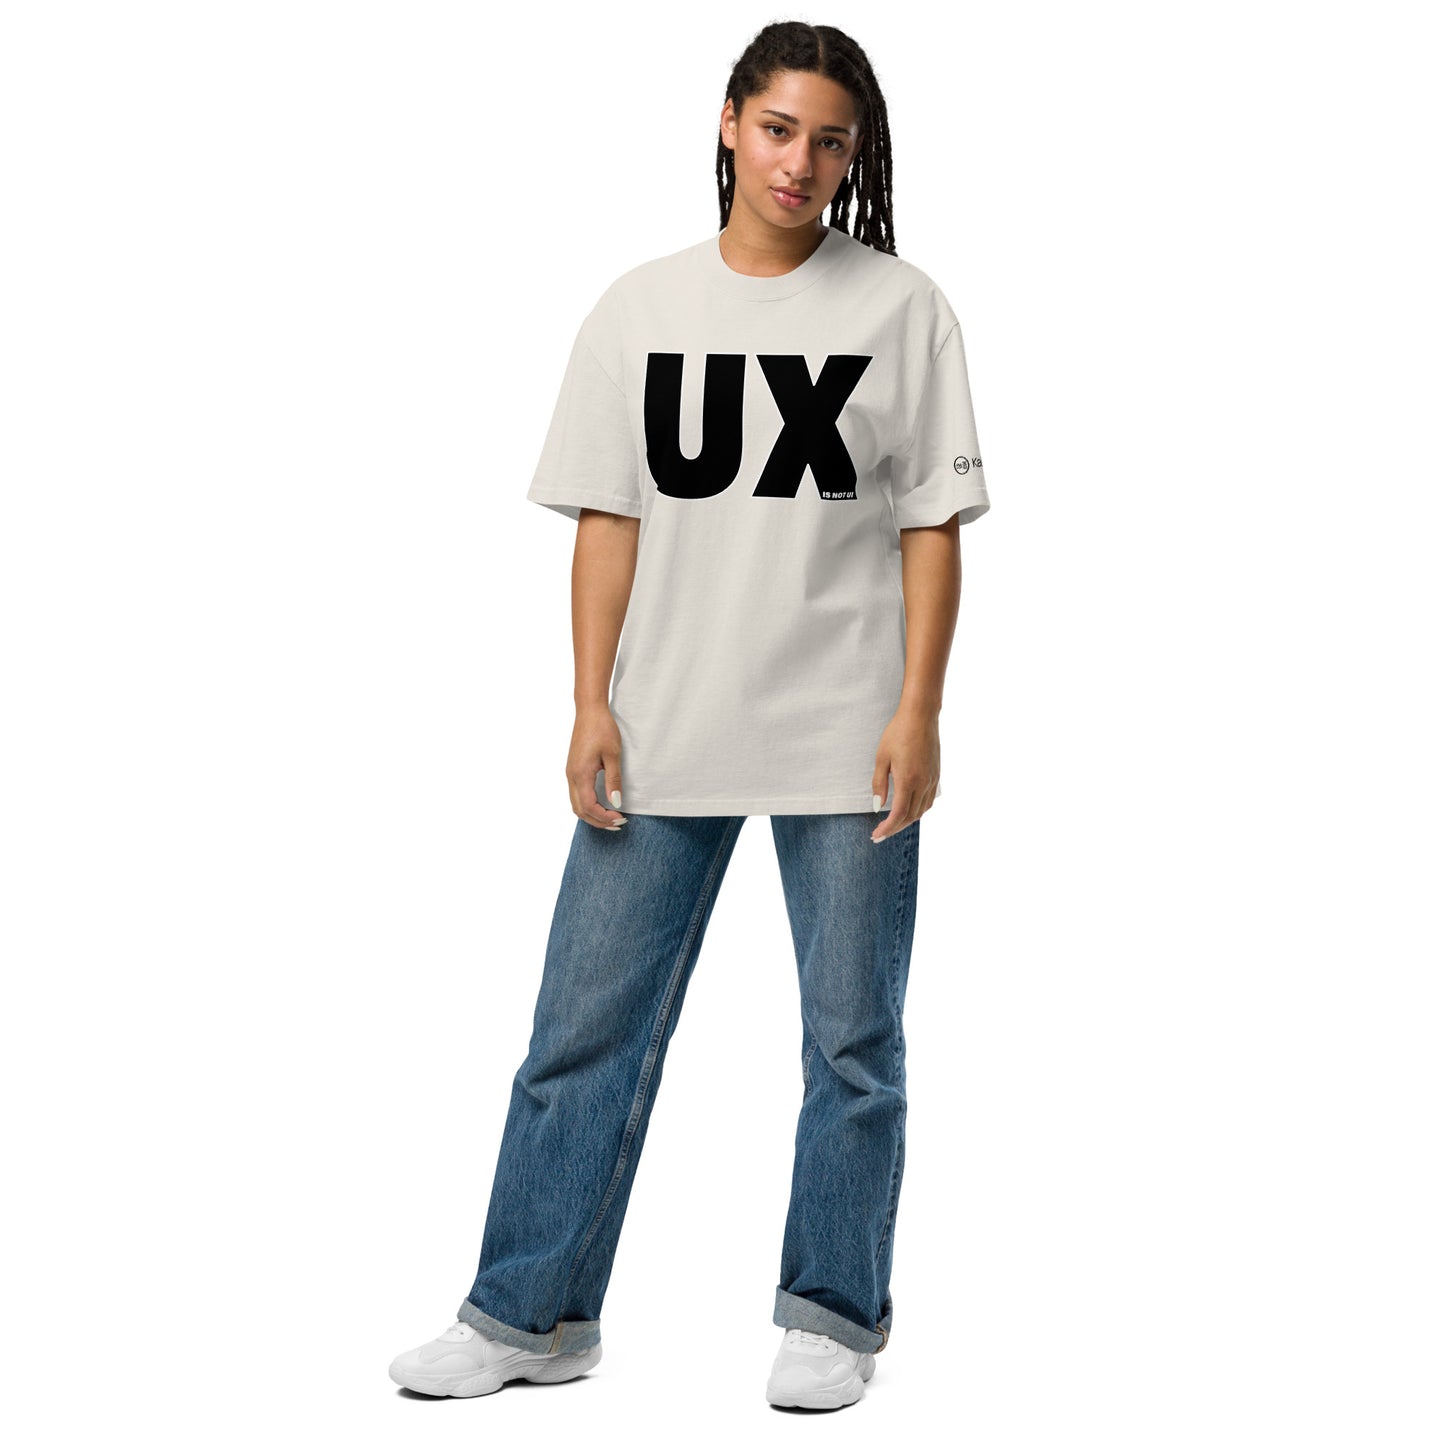 UX is not UI #5 (Oversized T)